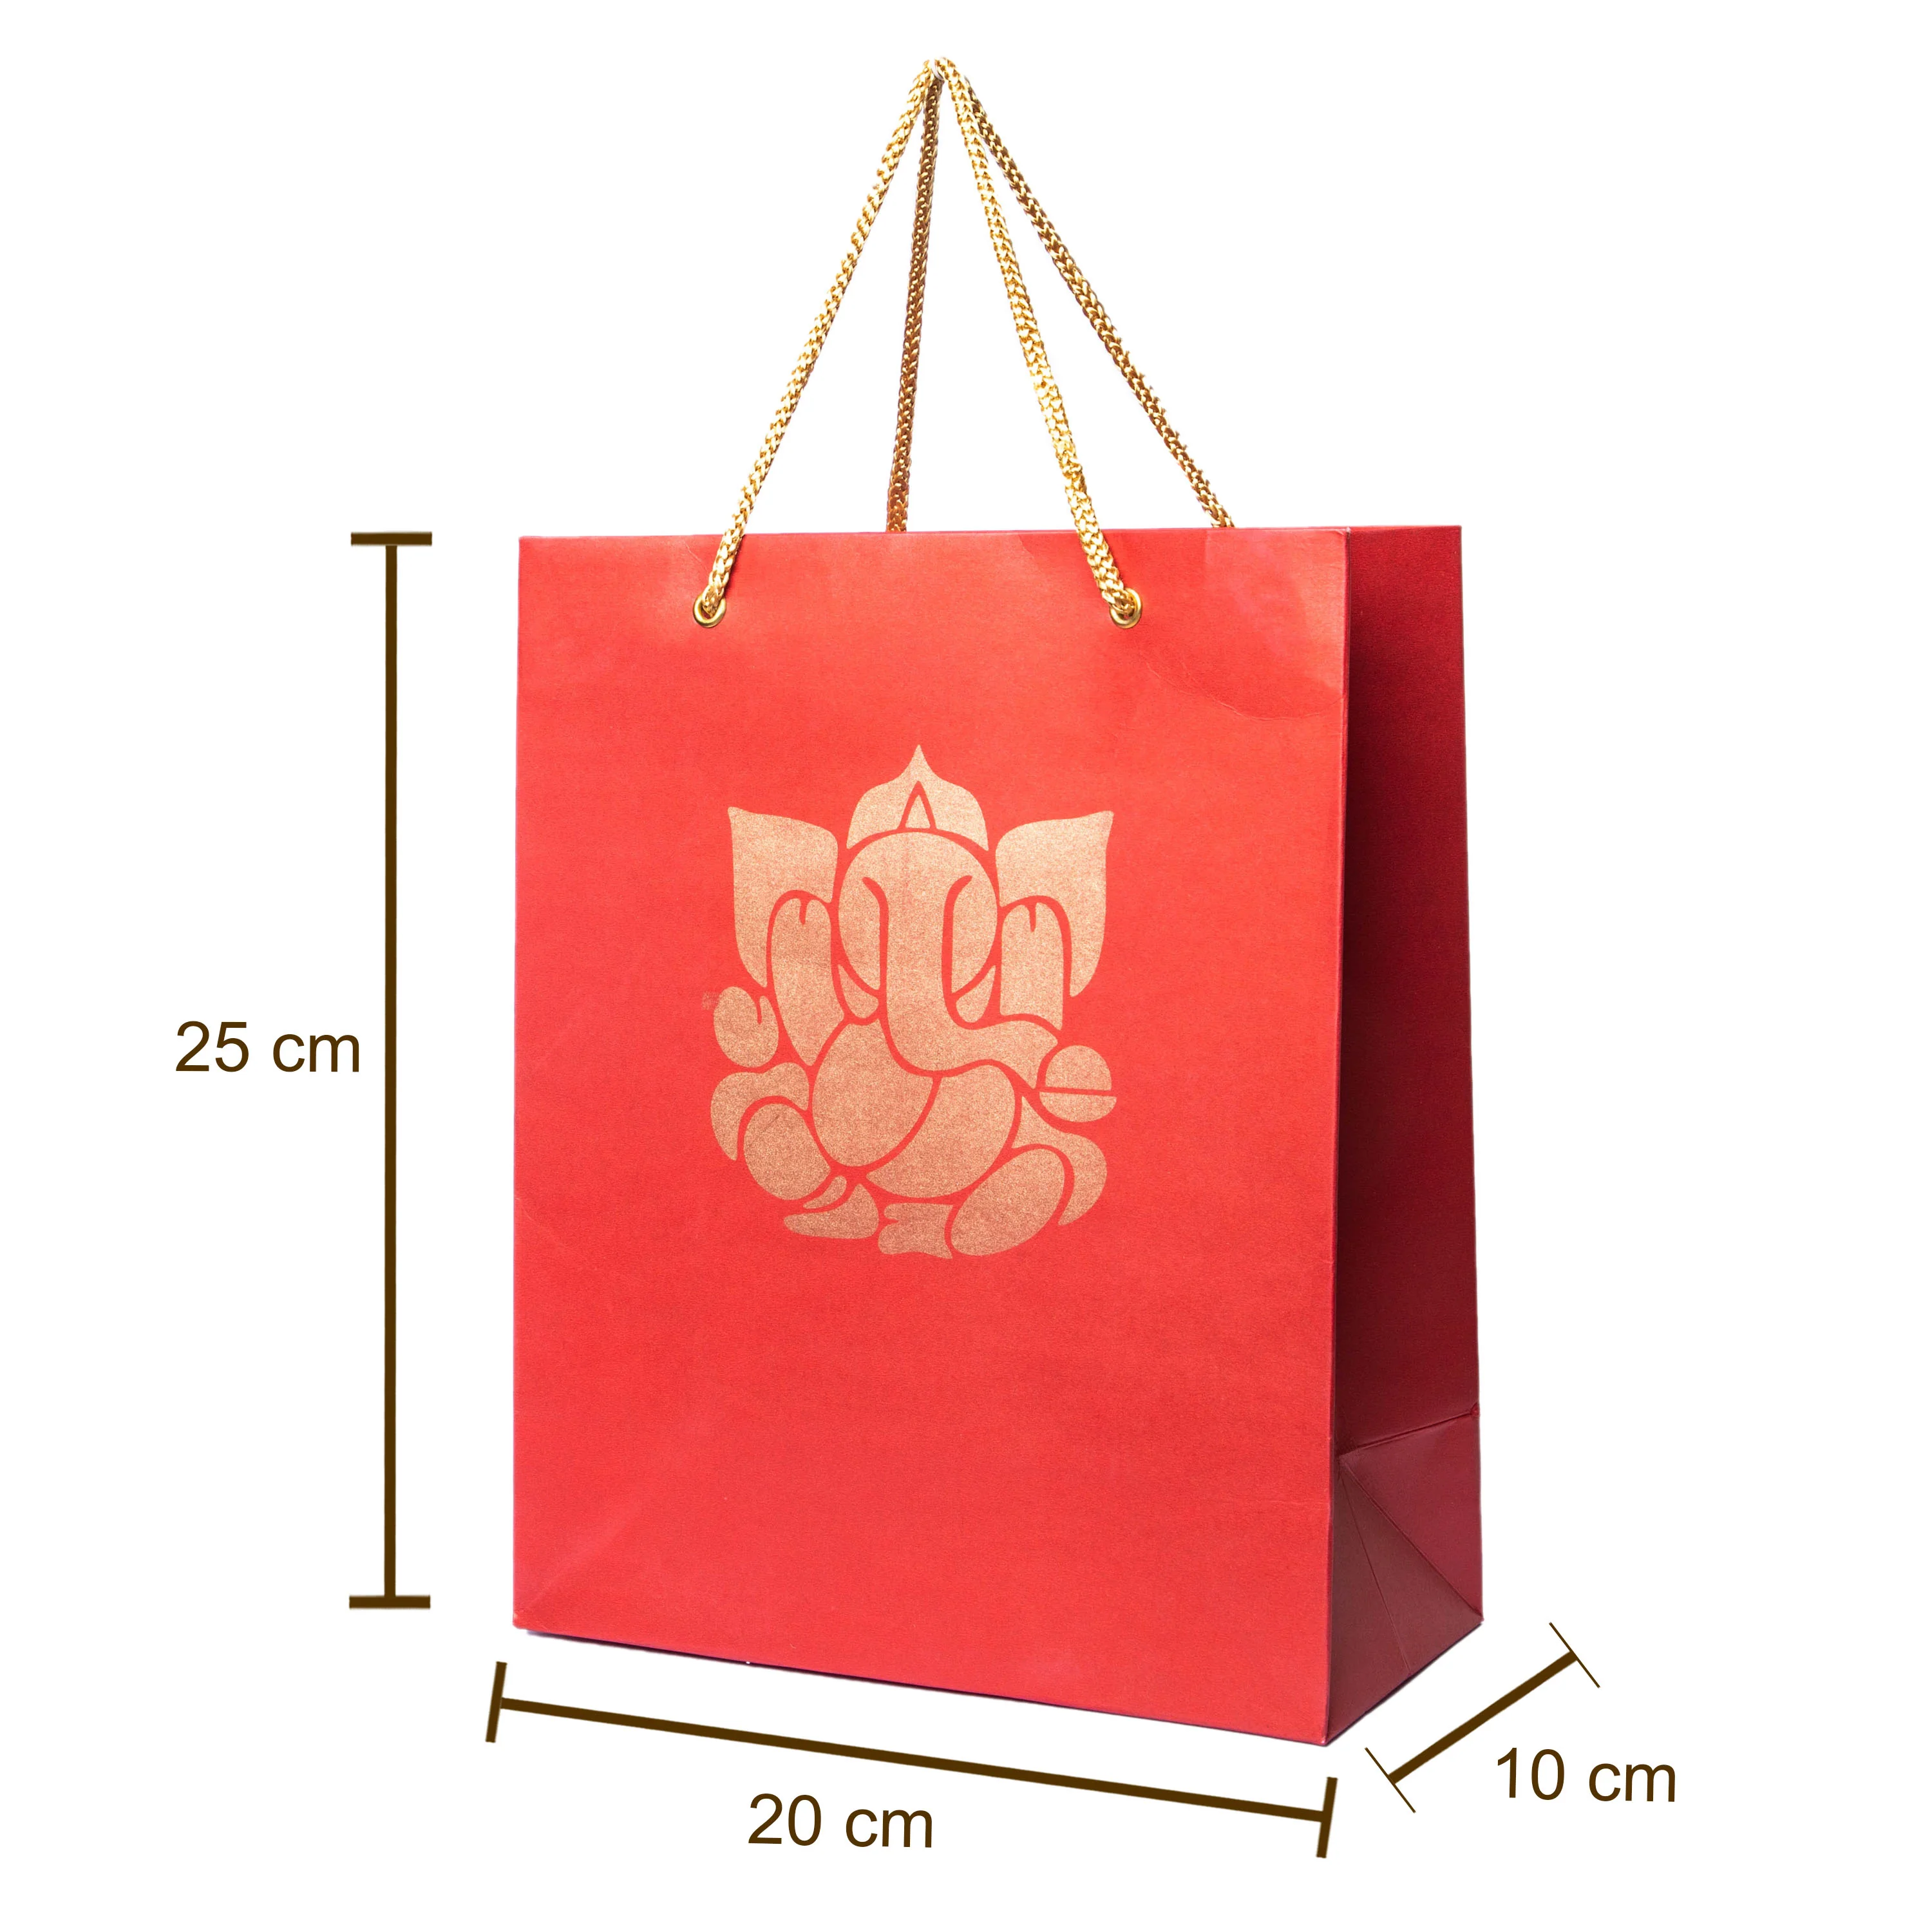 Gift Bags Cross Stitch Kit, code 2036 RIOLIS | Buy online on Mybobbin.com